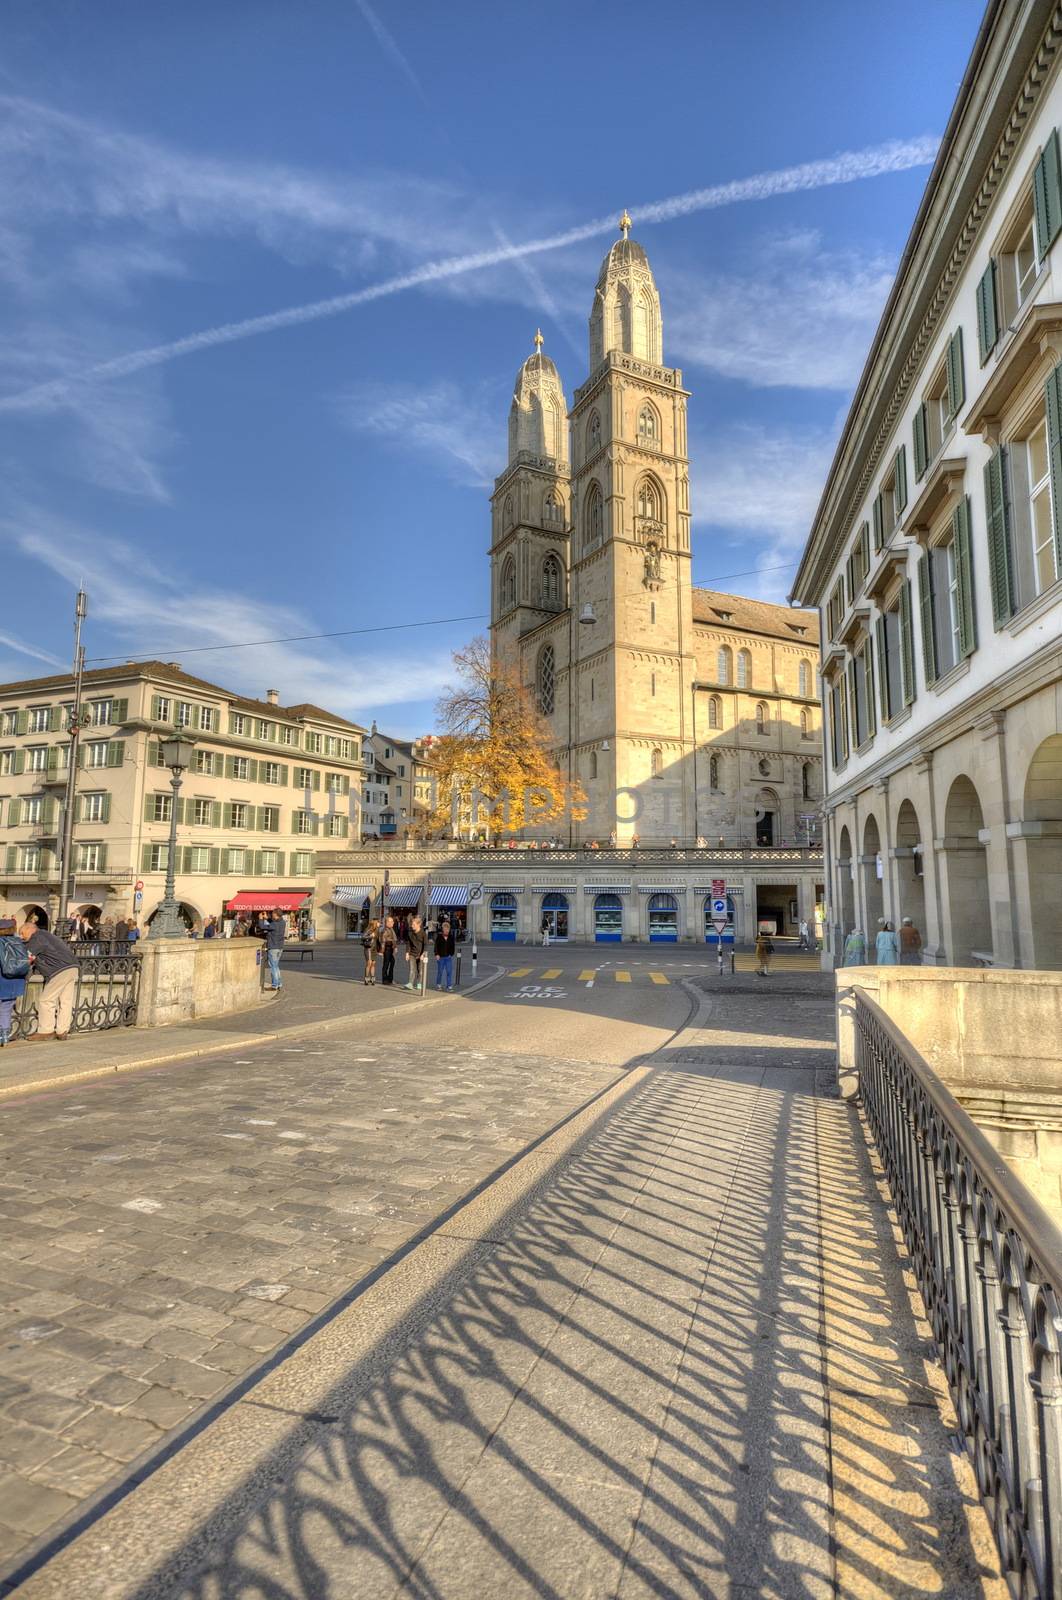 Cathedral of Zurich, Switzerland by anderm